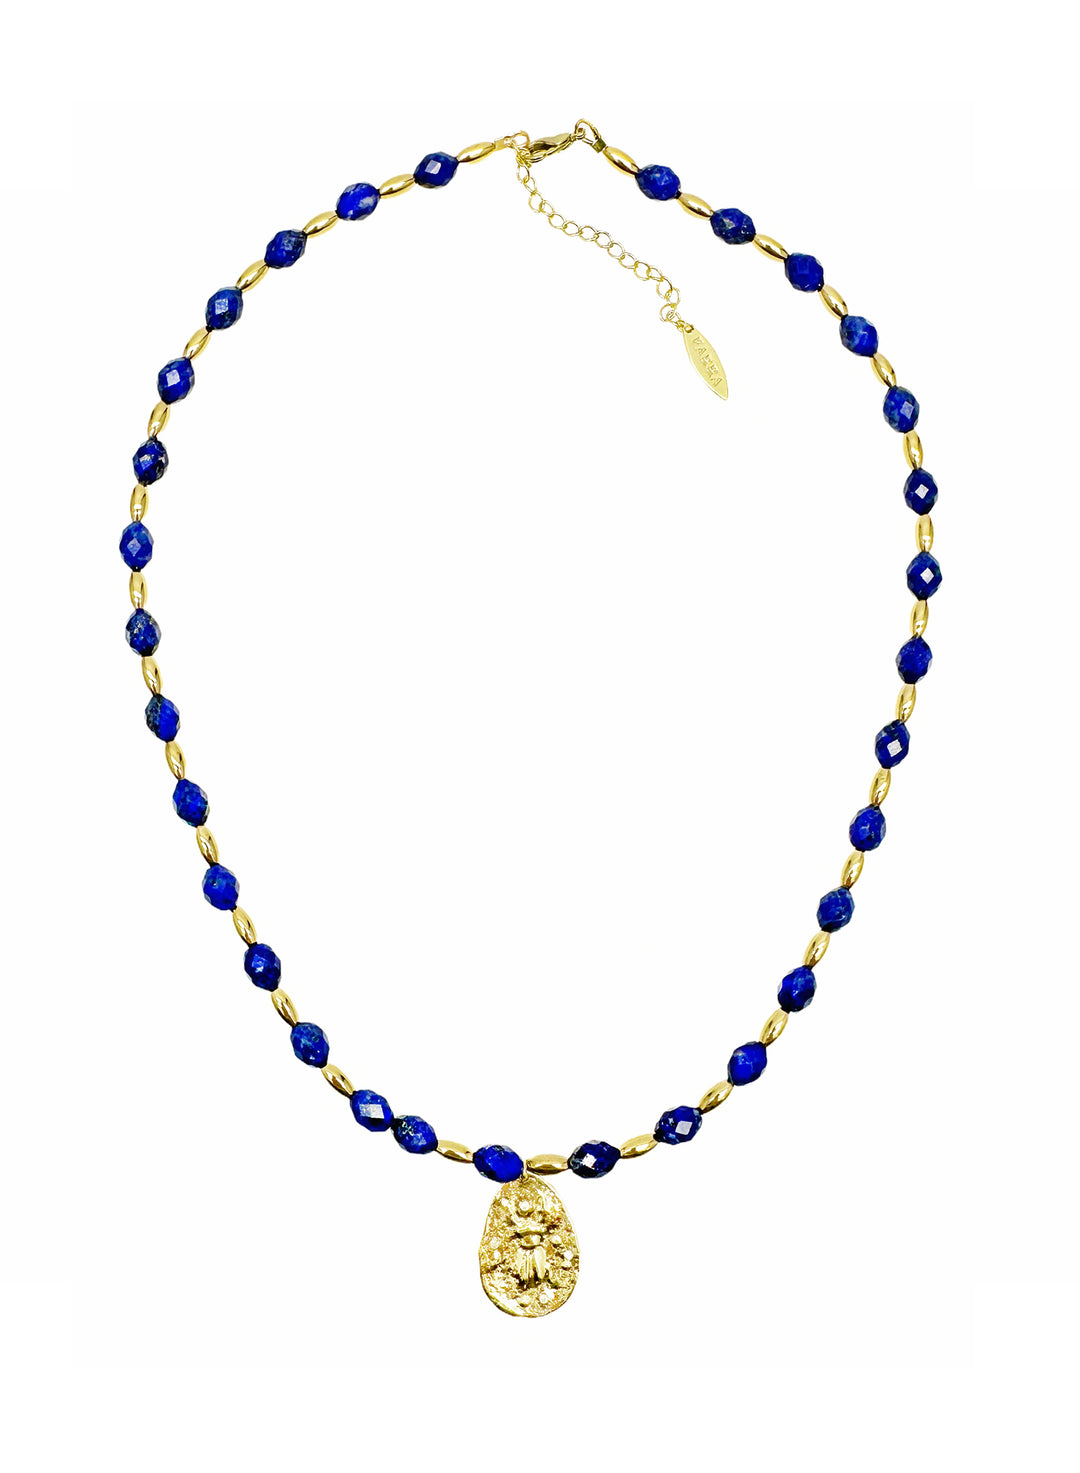 Blue Lapis with Coin Pendant Necklace LN035 - FARRA